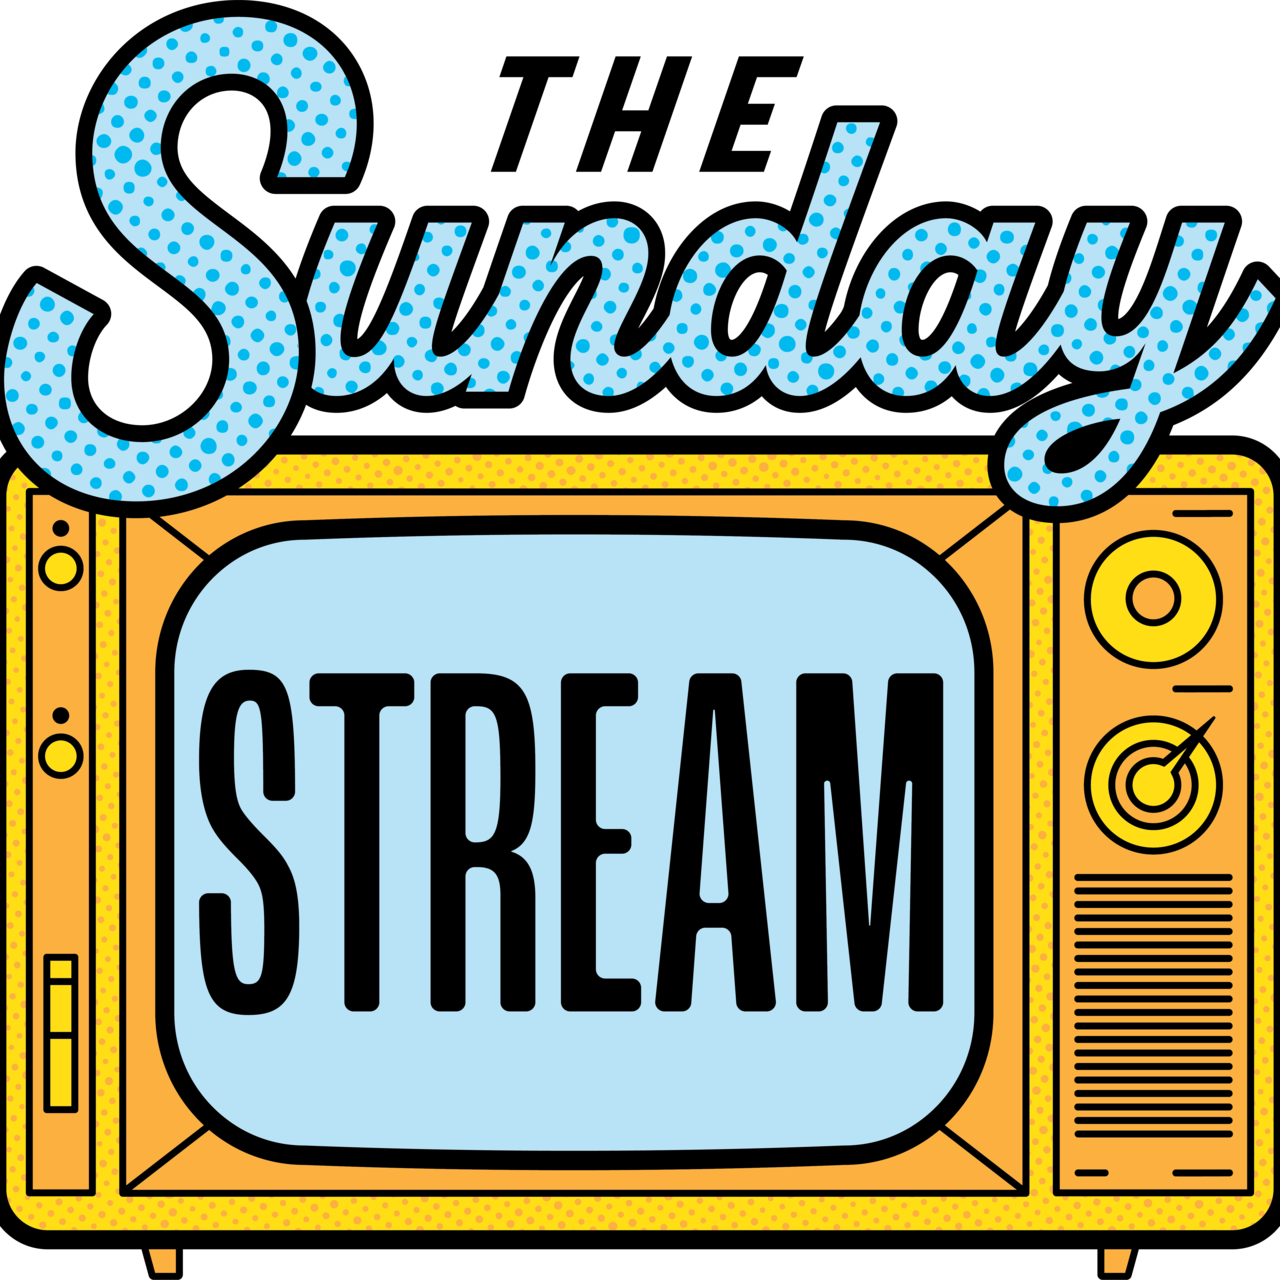 The Sunday Stream